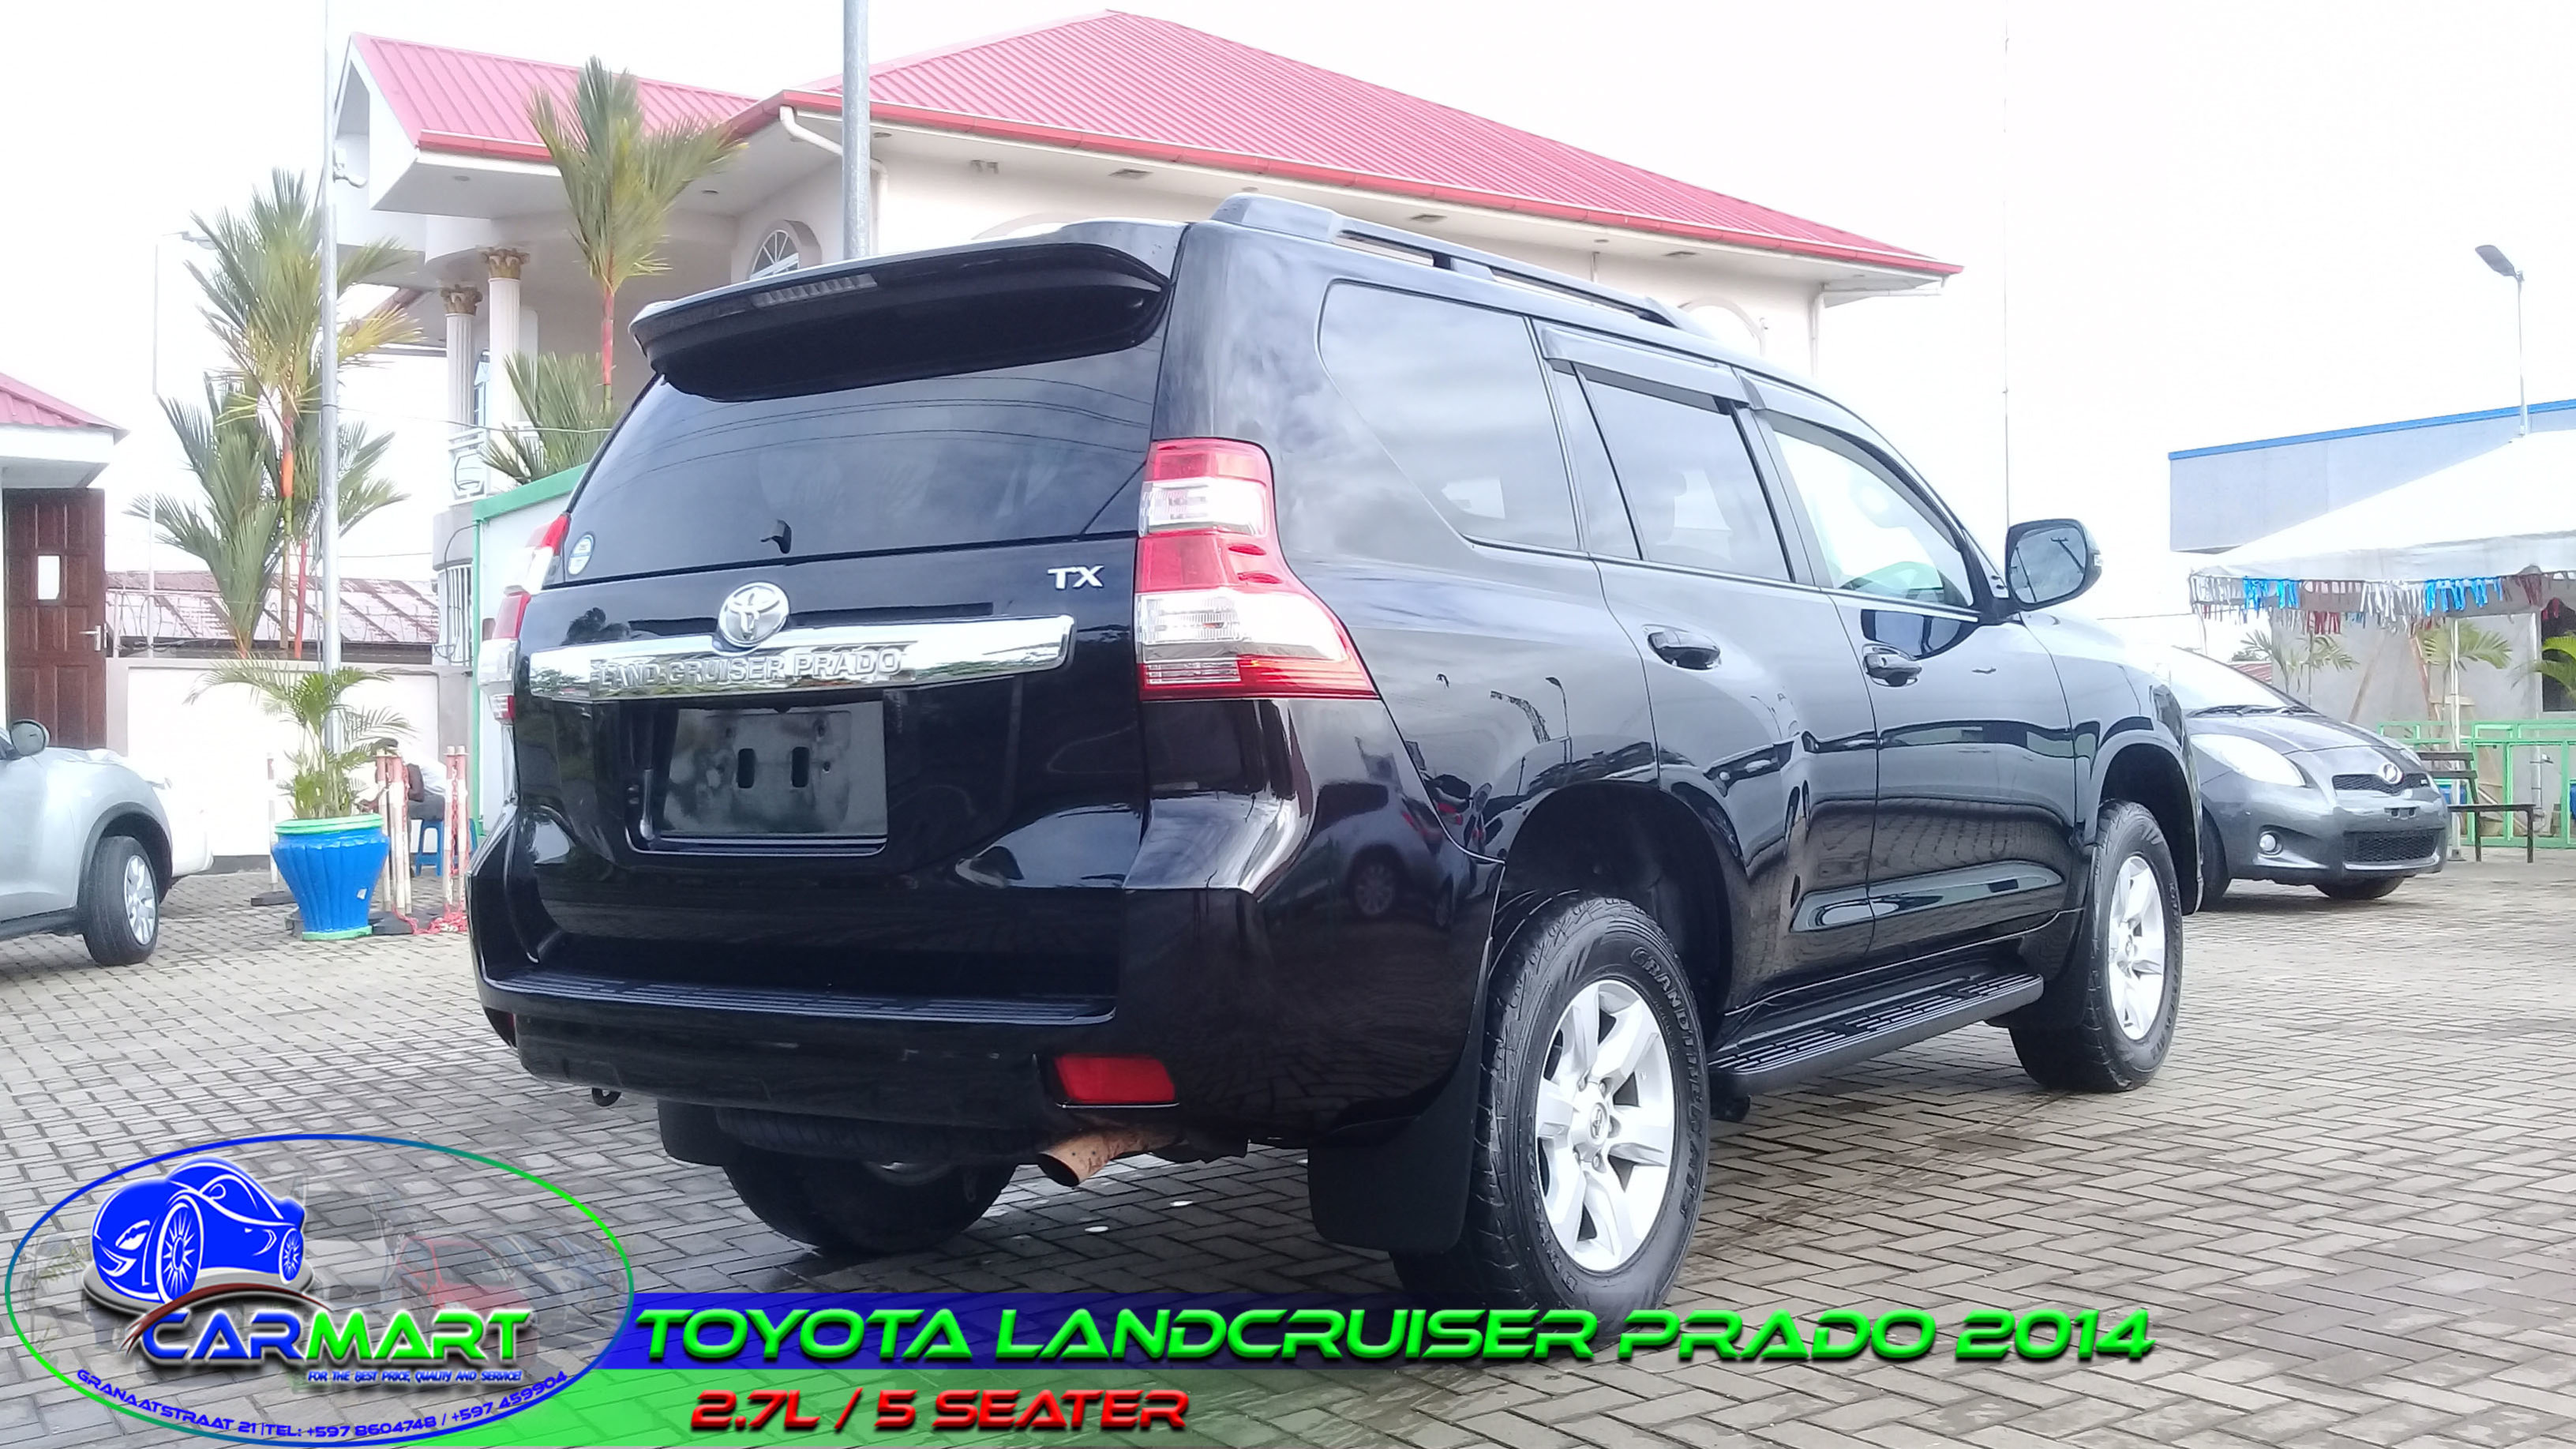 Toyota, Land Cruiser Prado, 2014 Carmart